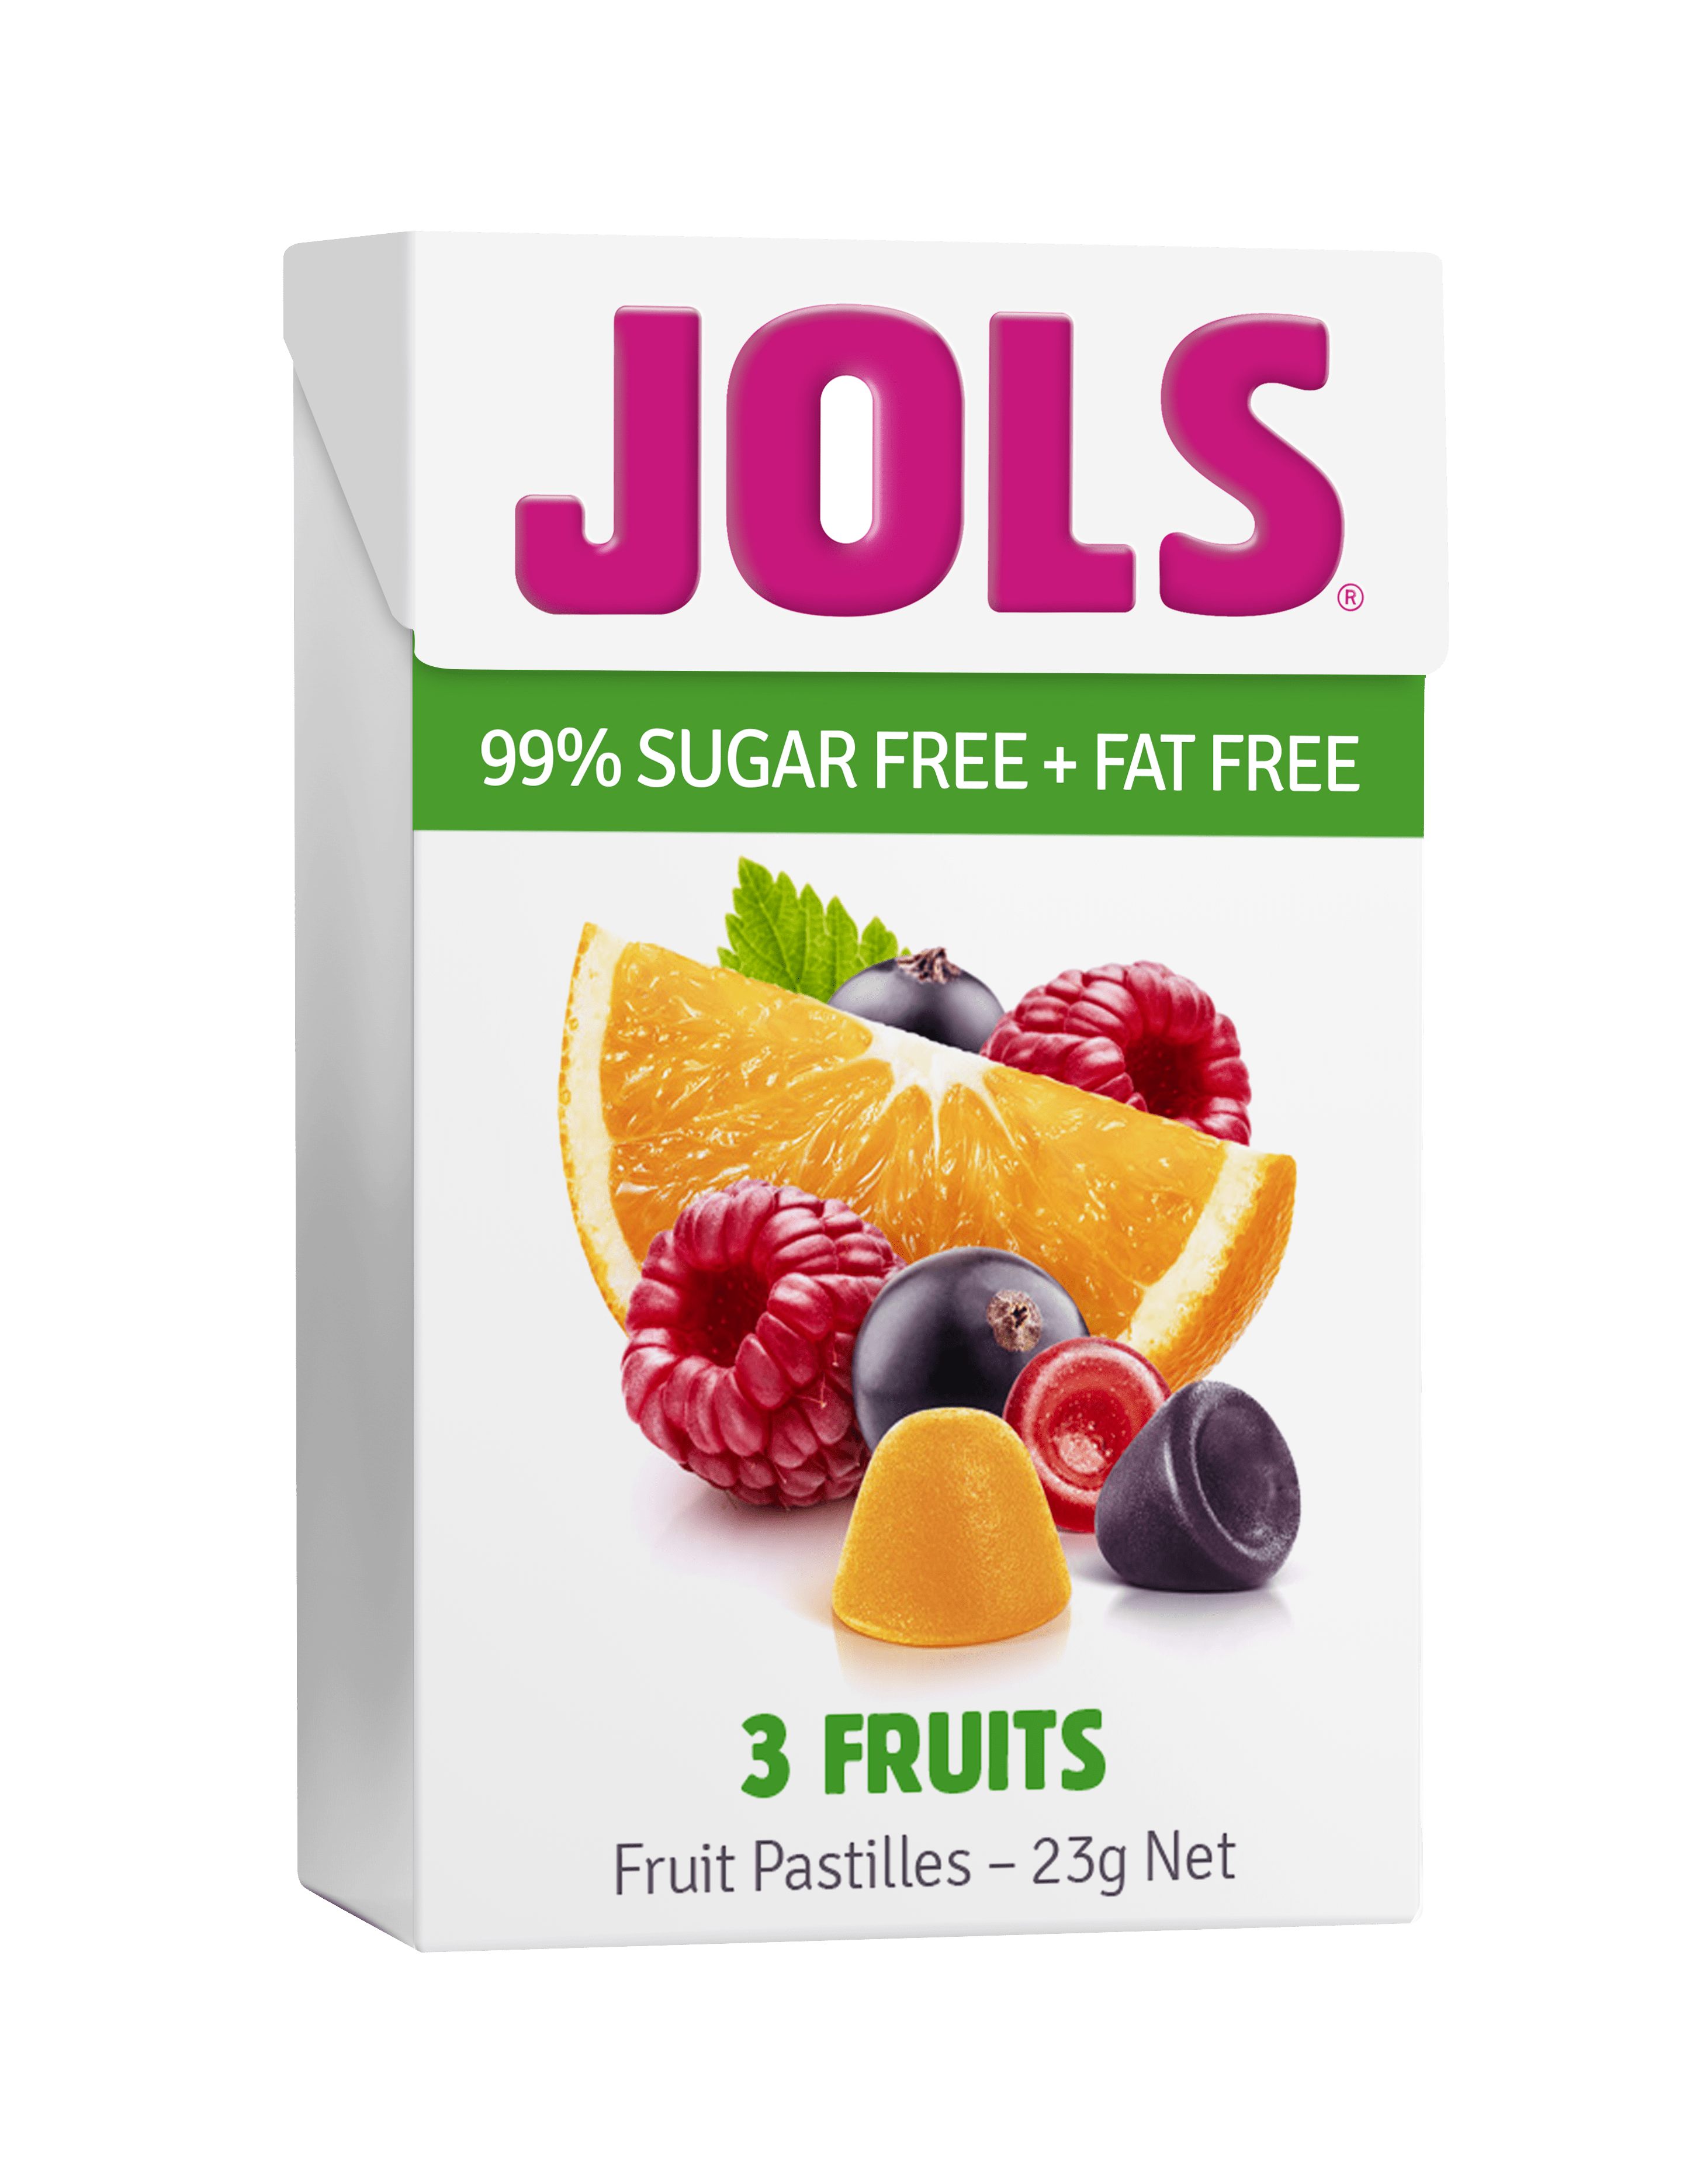 fe-1485-jols-3-fruits-for-web-min